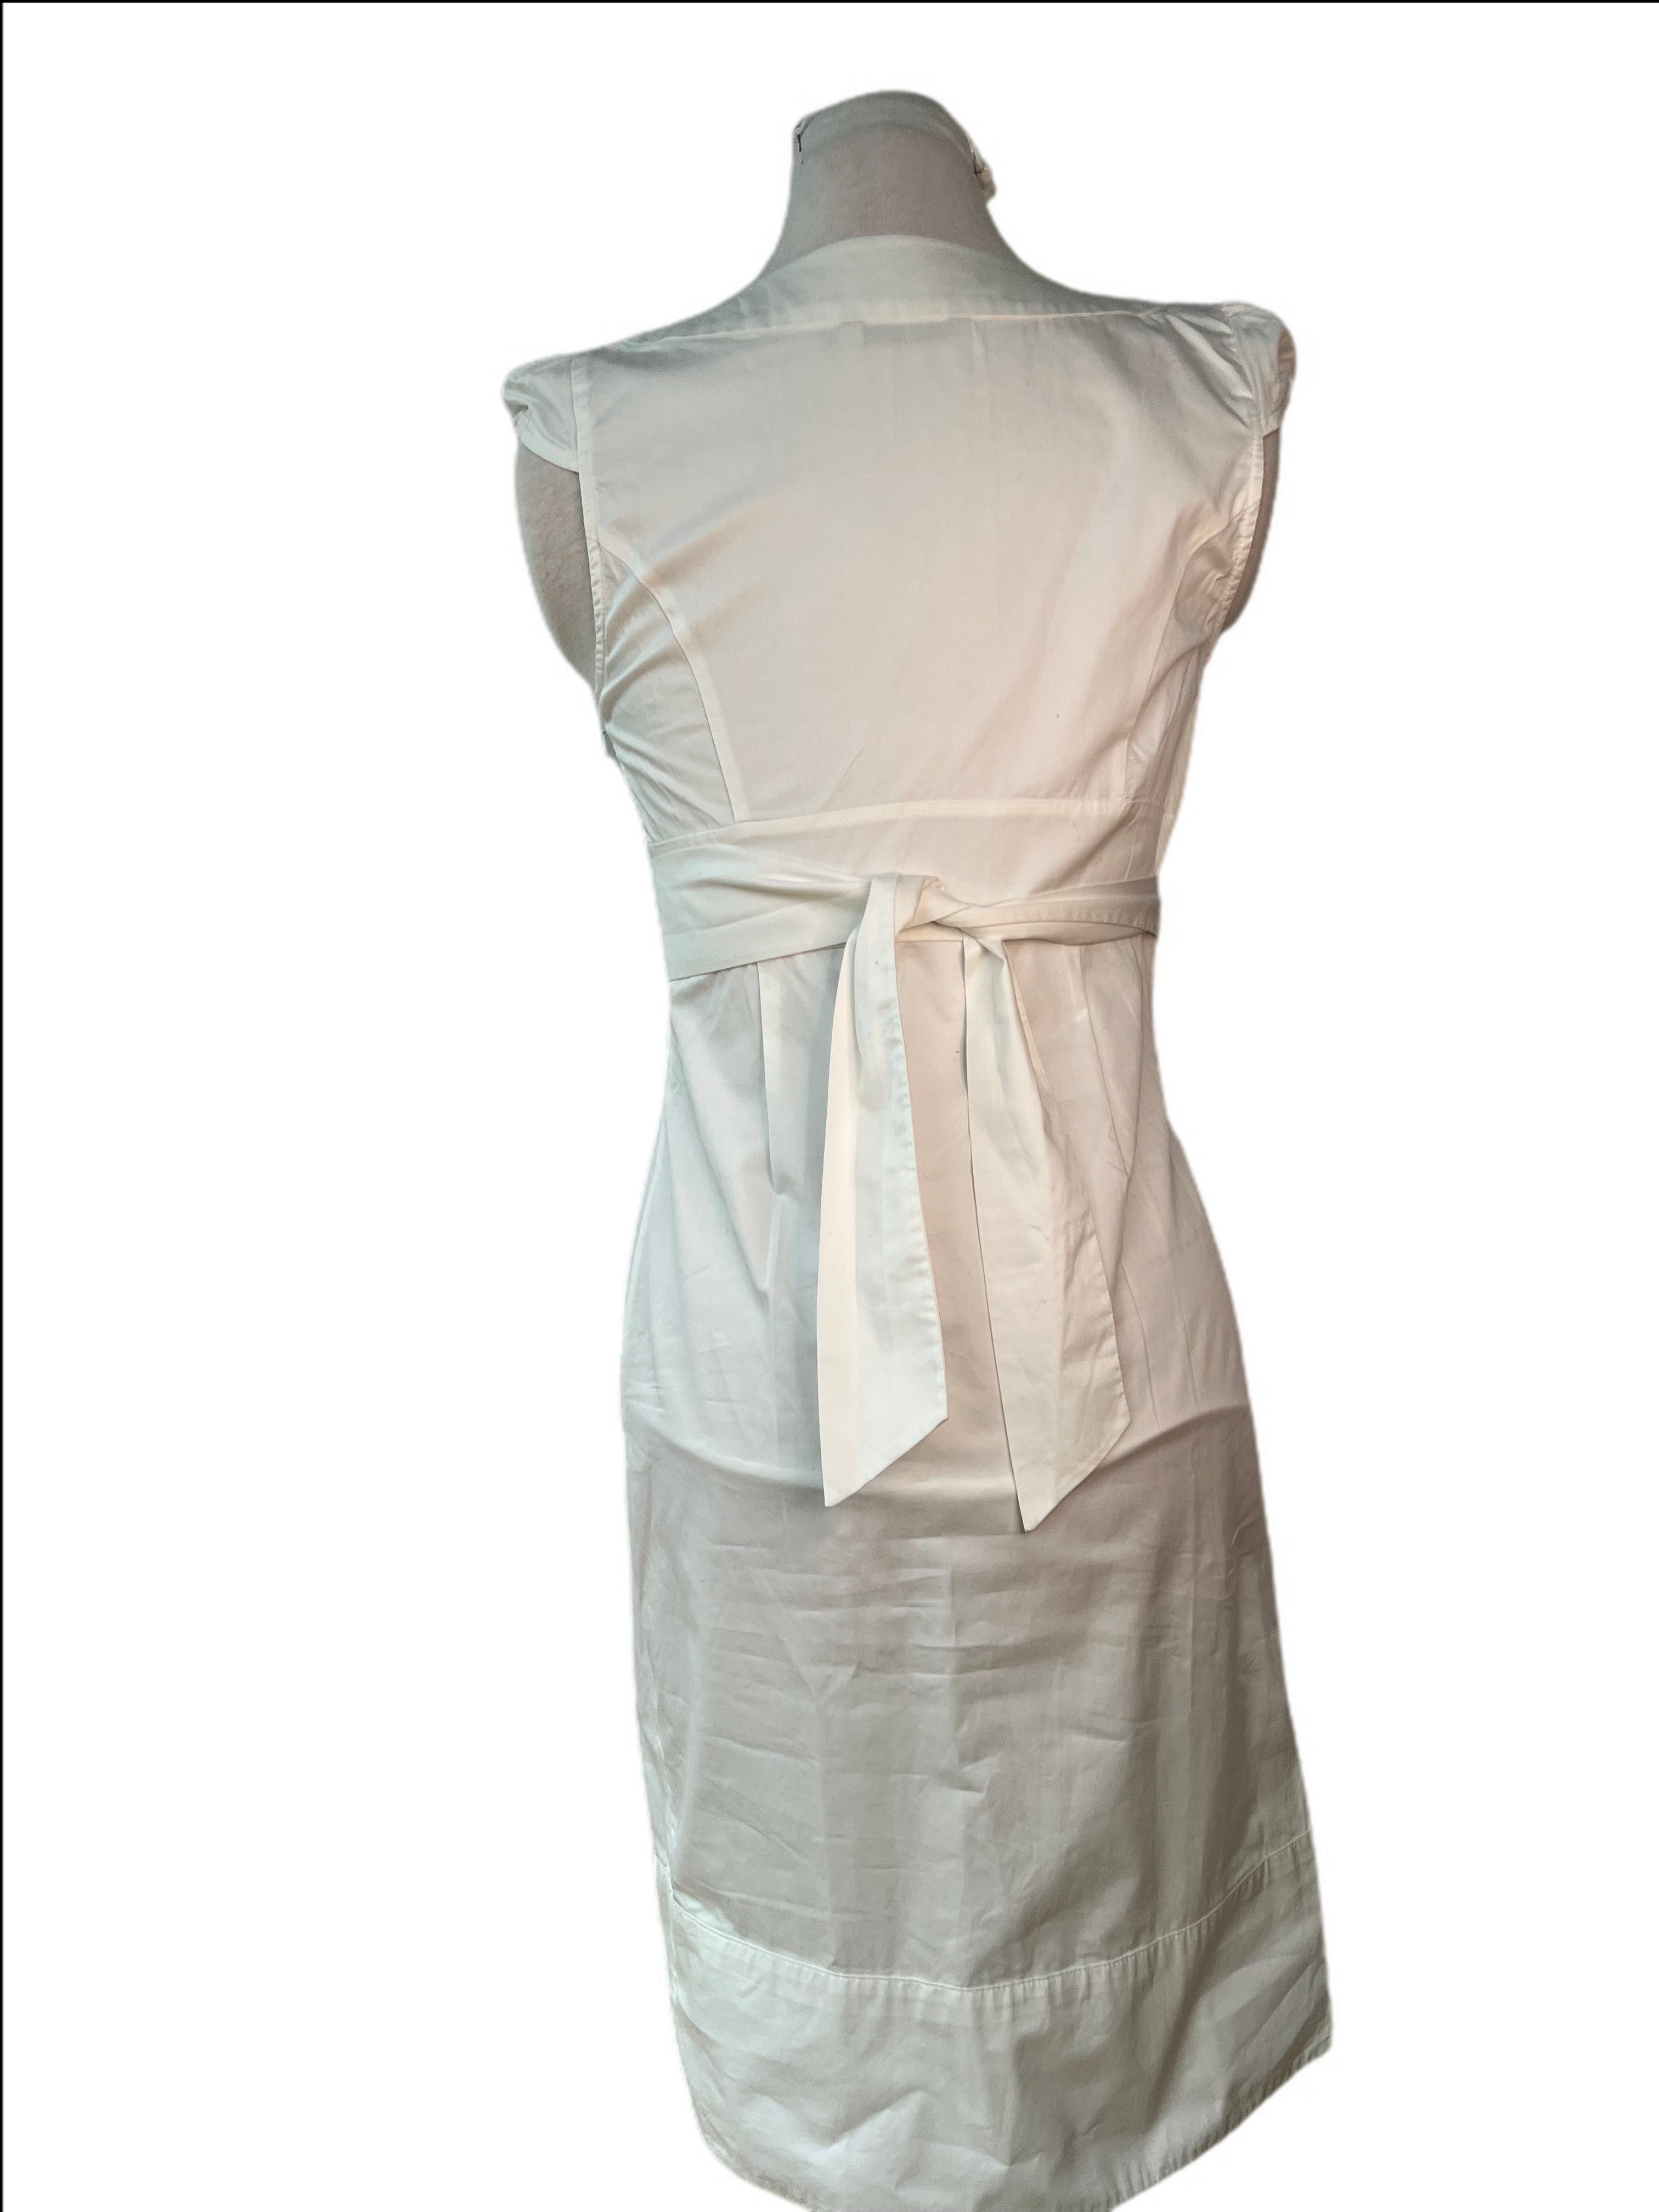 Sleeveless Sheath Dress with belt detail